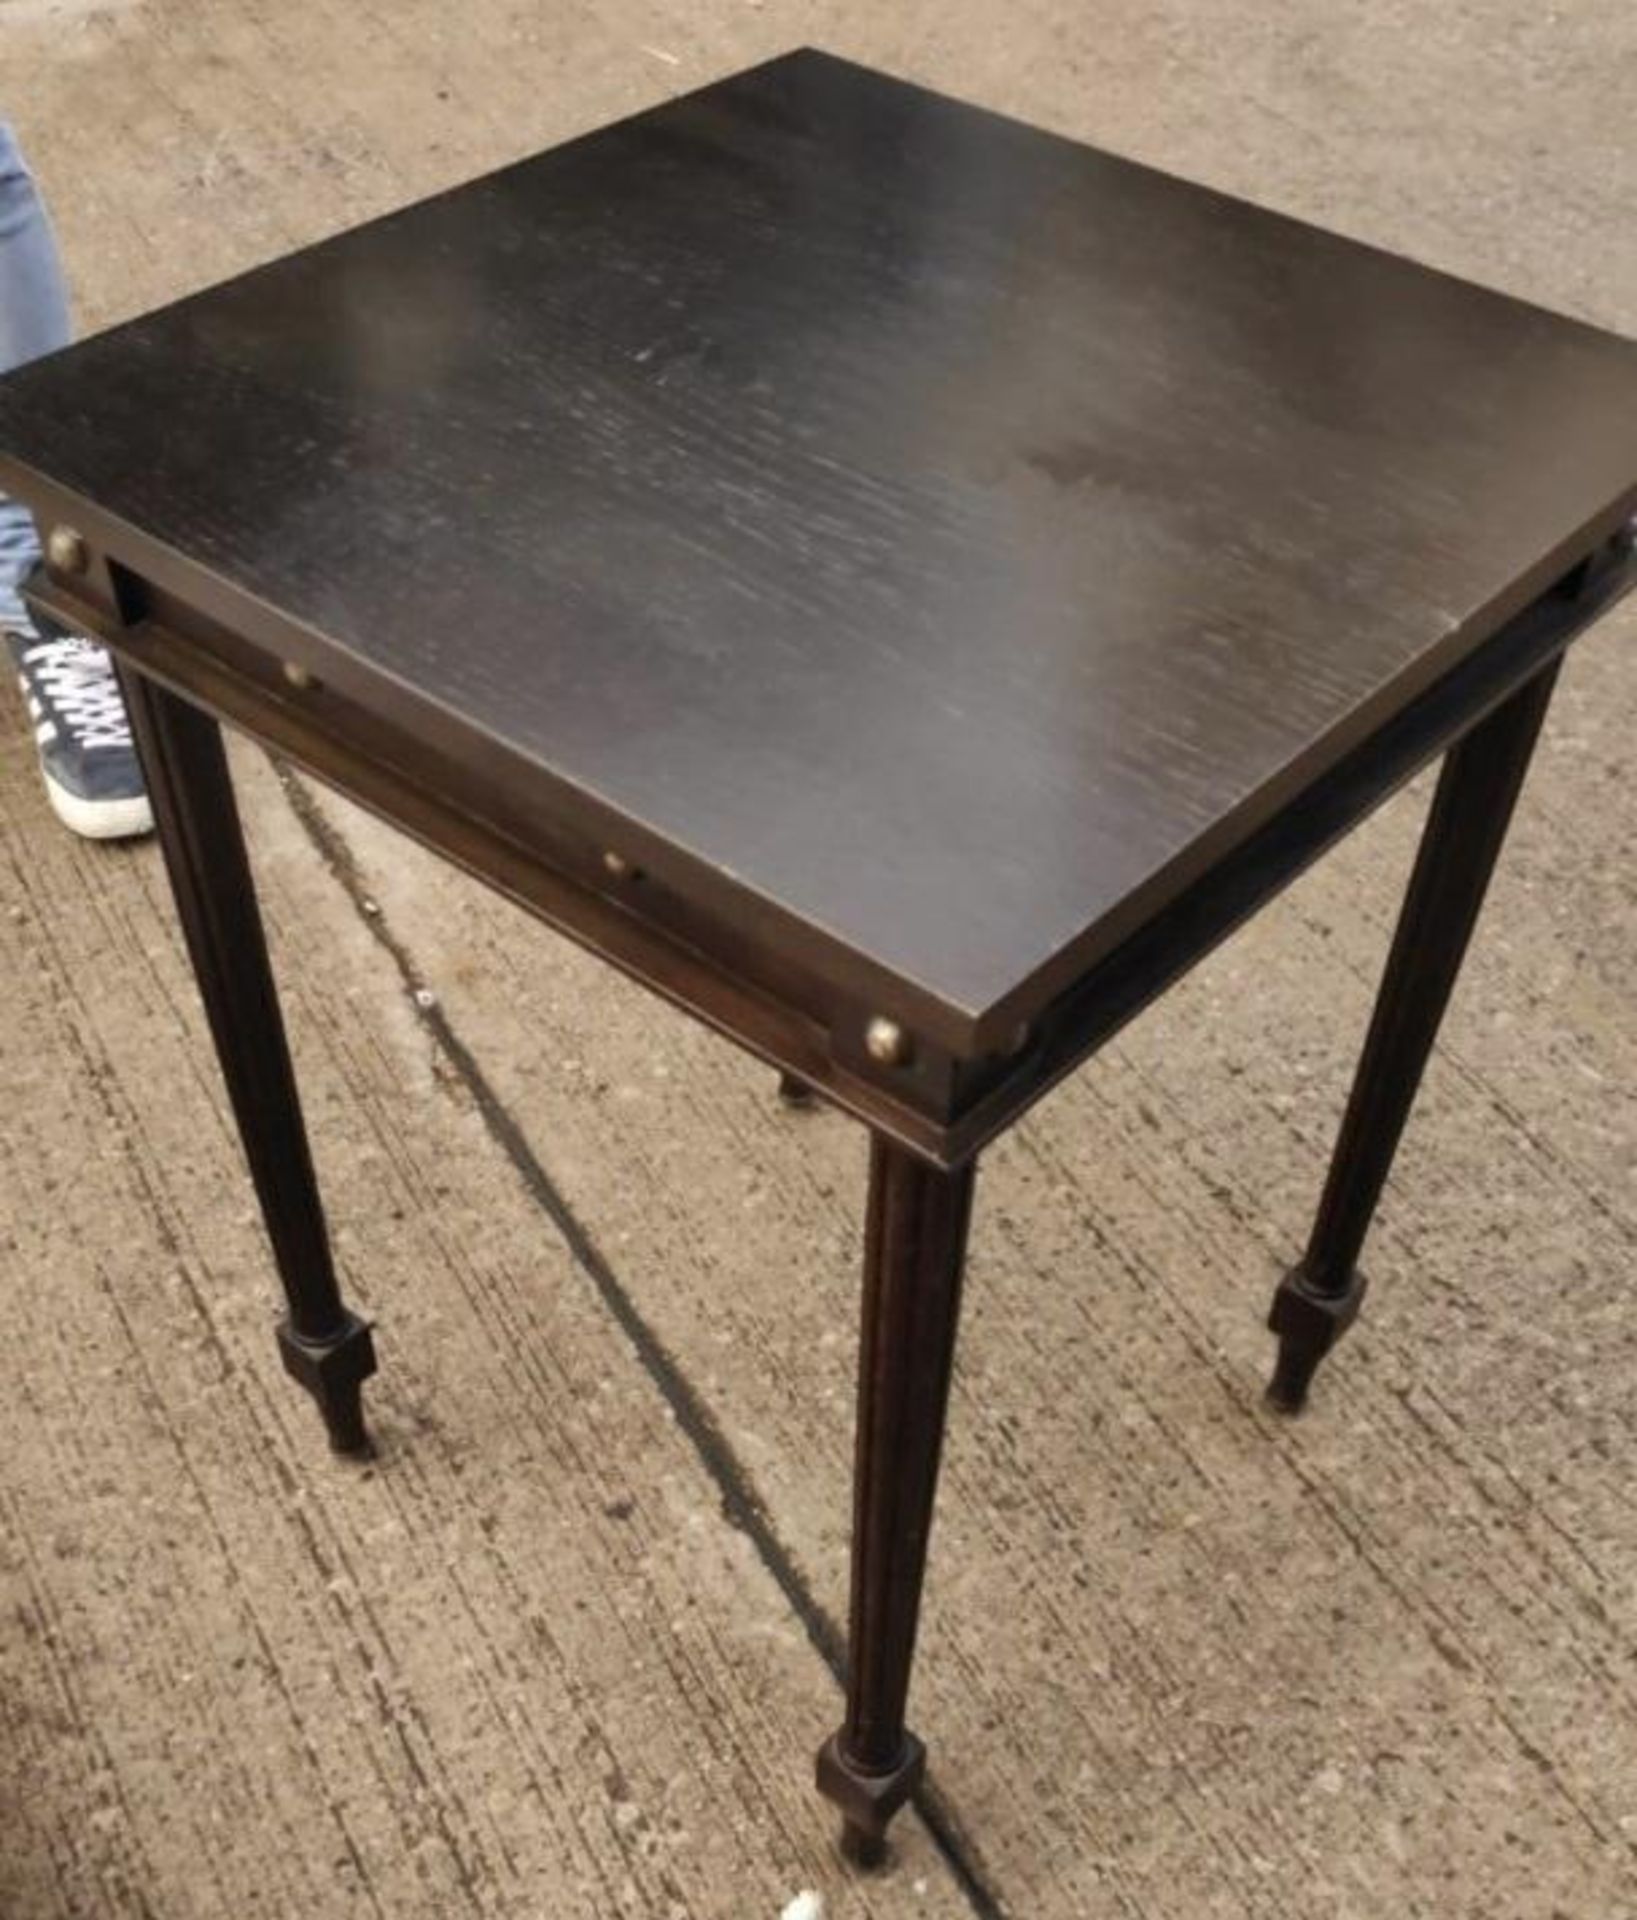 1 x JUSTIN VAN BREDA 'Thomas' Tall Side Table With A Dark Oak Finish - Dimensions: W50 x D50 x - Image 2 of 5